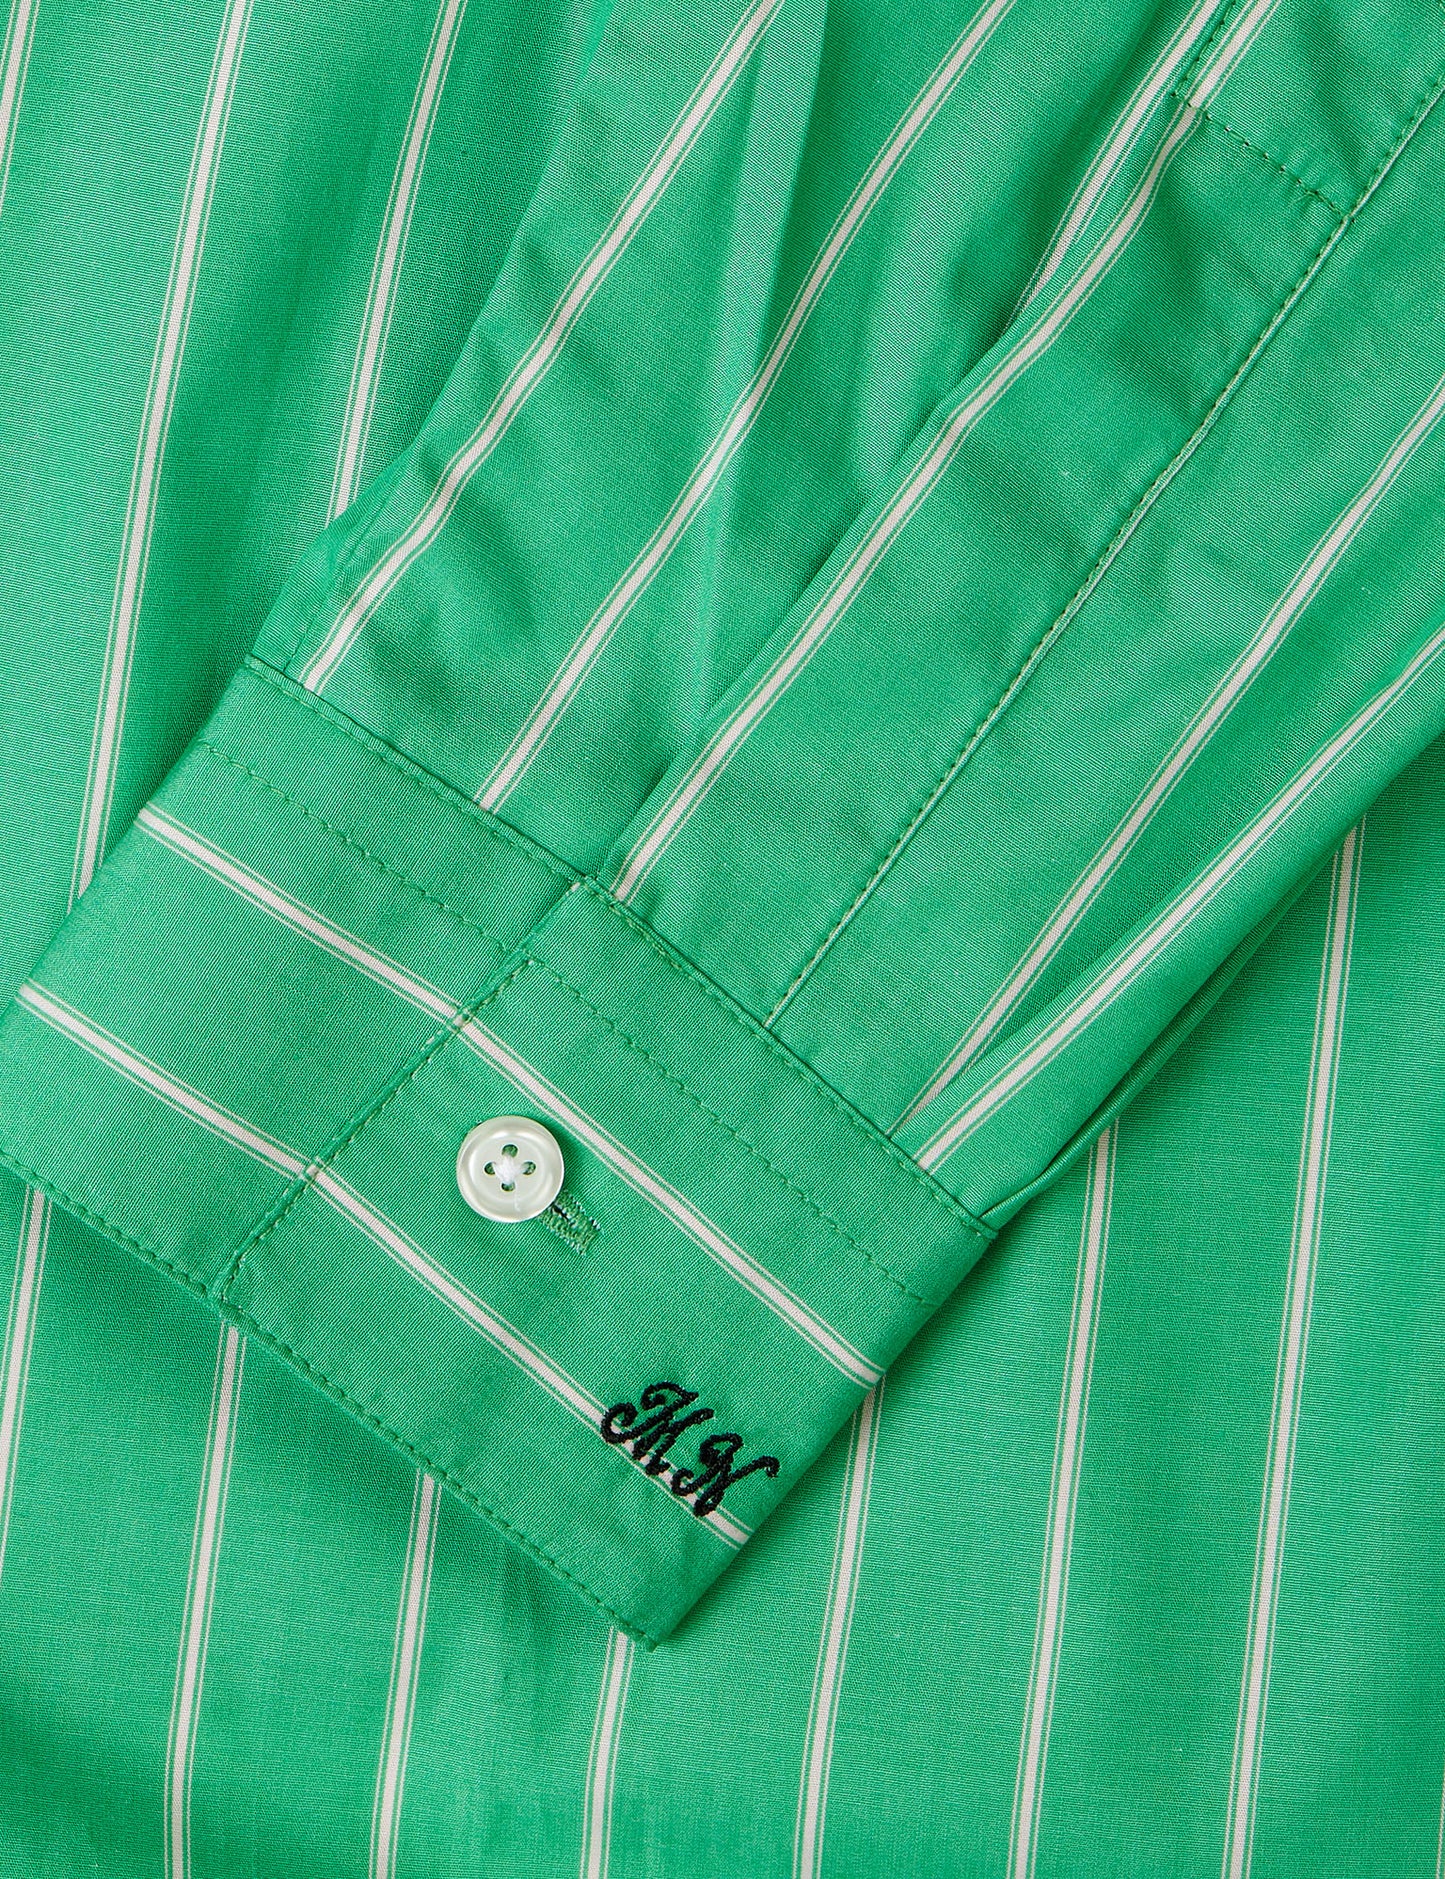 Yarpo Crane Shirt, YD Stripe/Bright Green